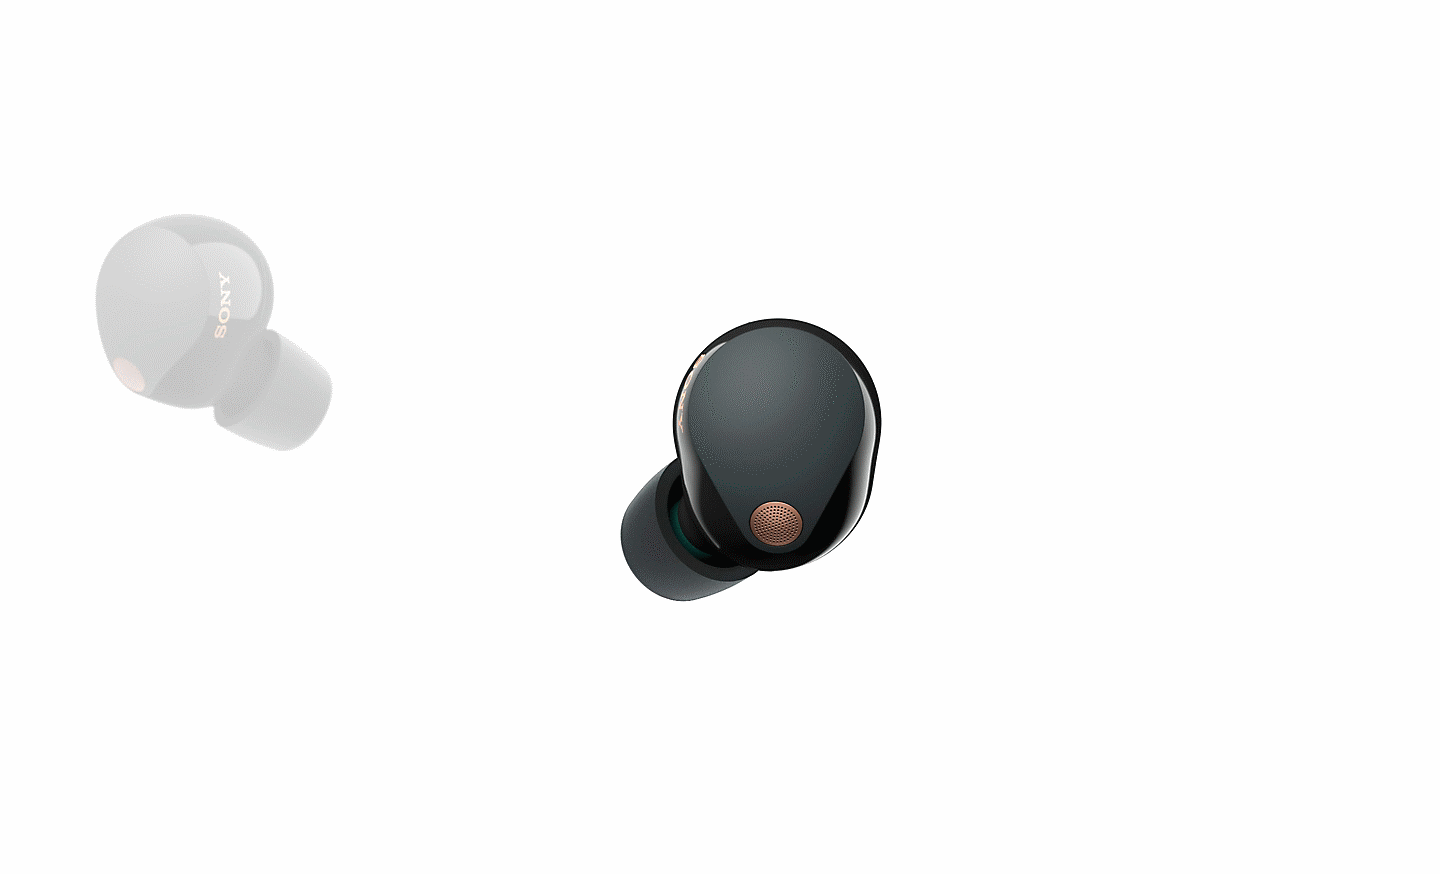 360-degree view of the WF-1000XM5 headphones